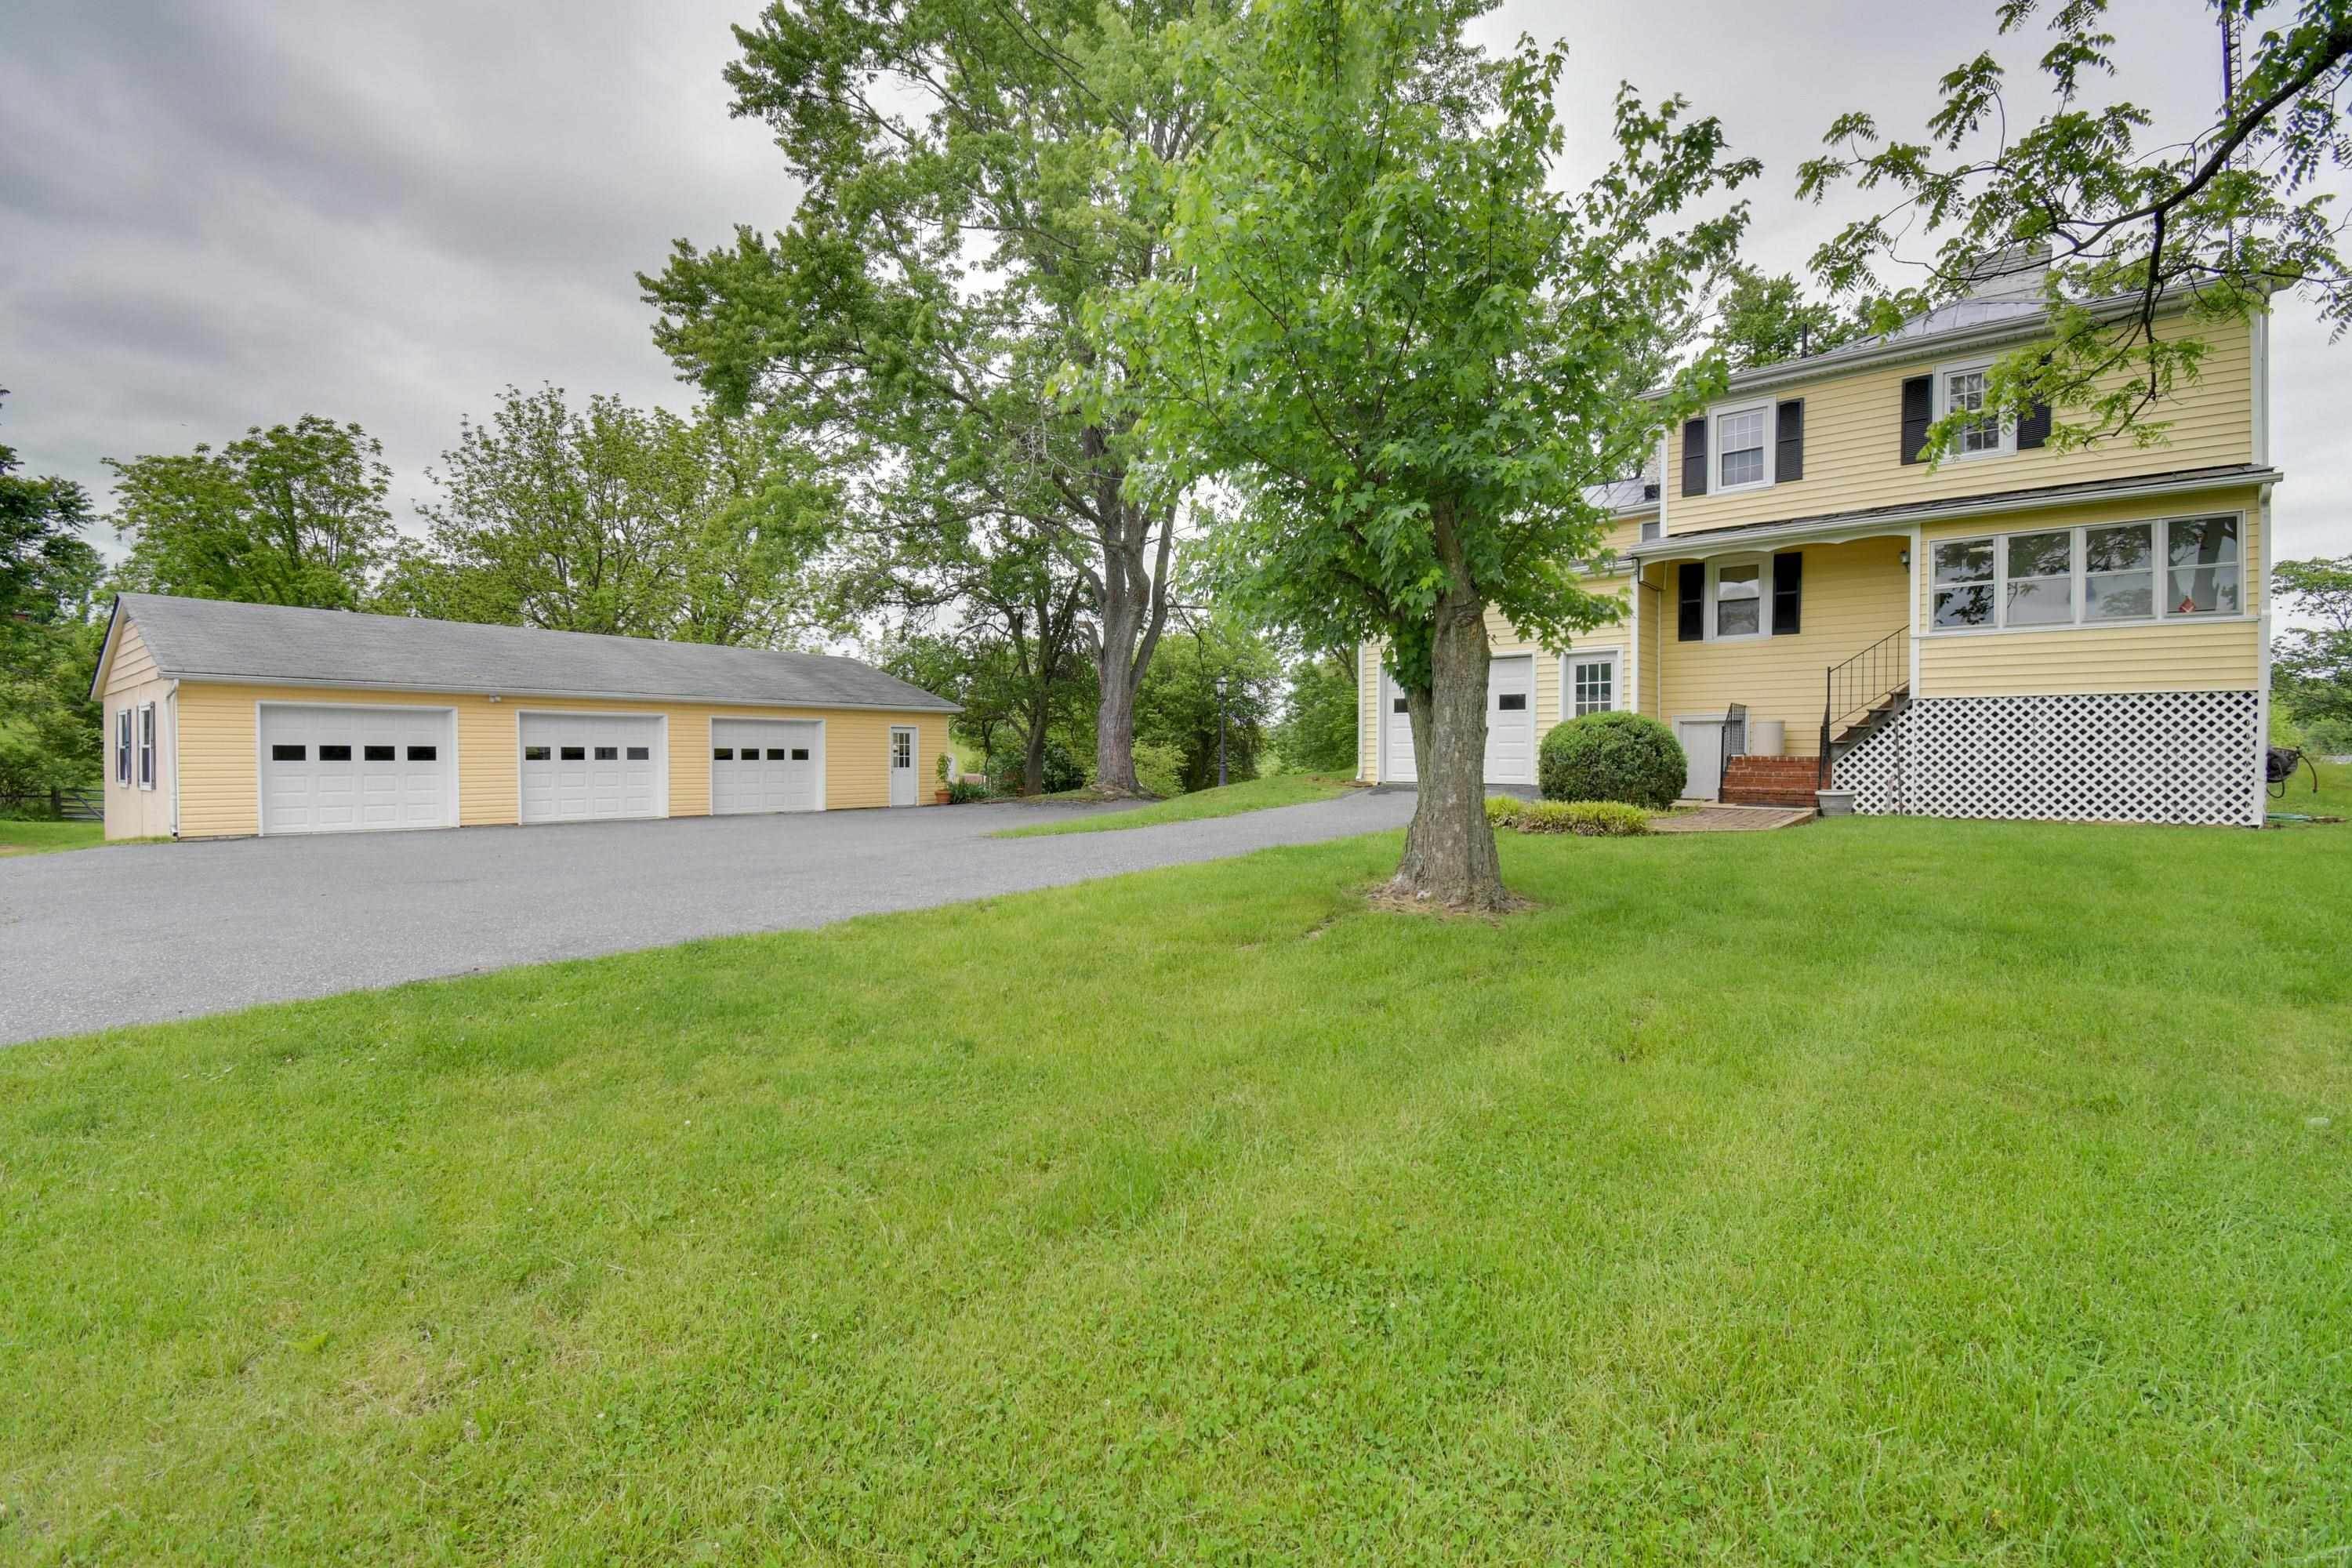 40. Single Family Homes for Sale at 58 HITE Lane Staunton, Virginia 24401 United States